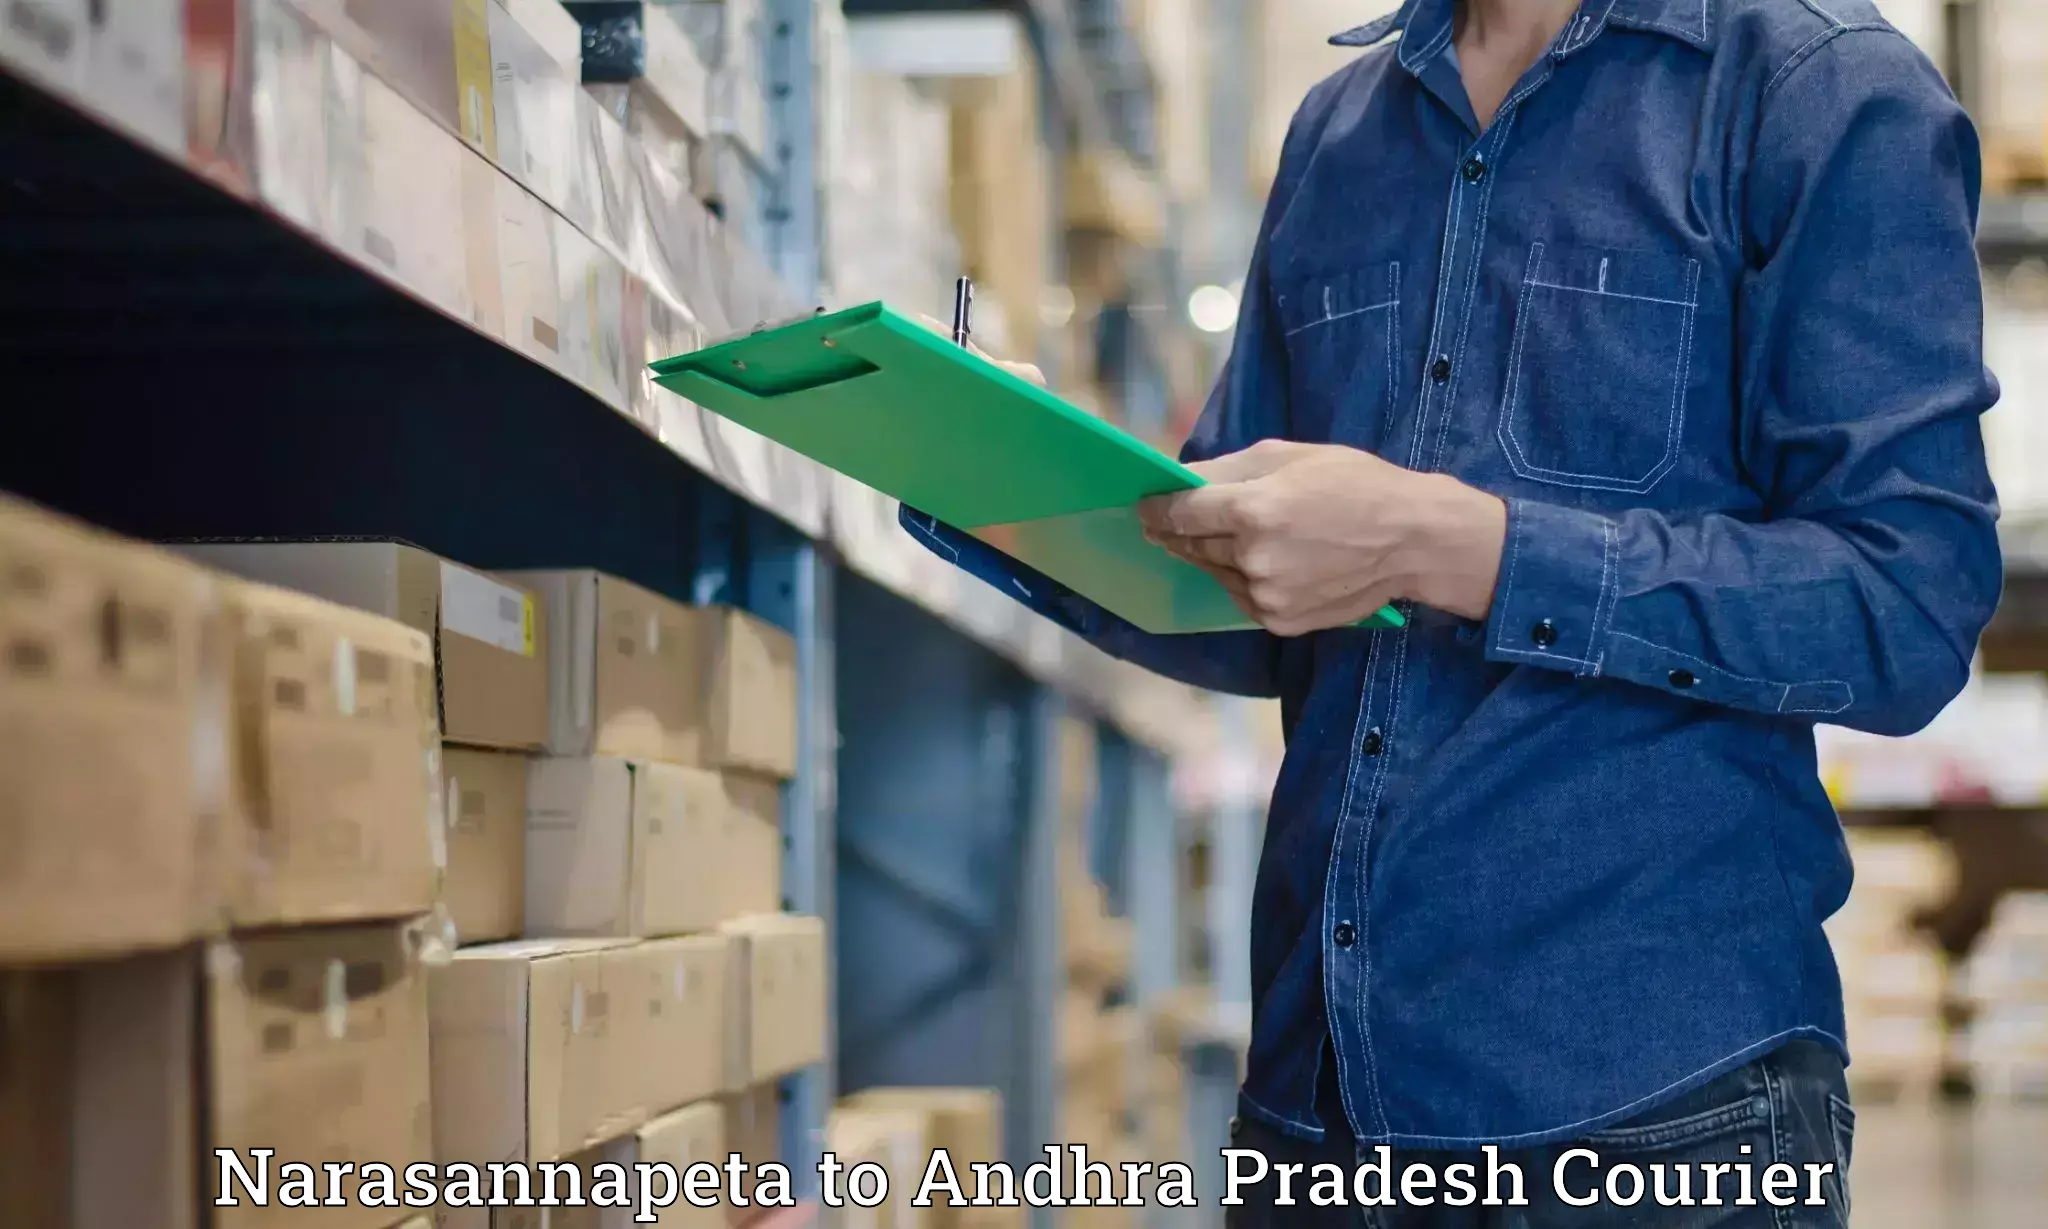 Professional courier handling Narasannapeta to Sri City